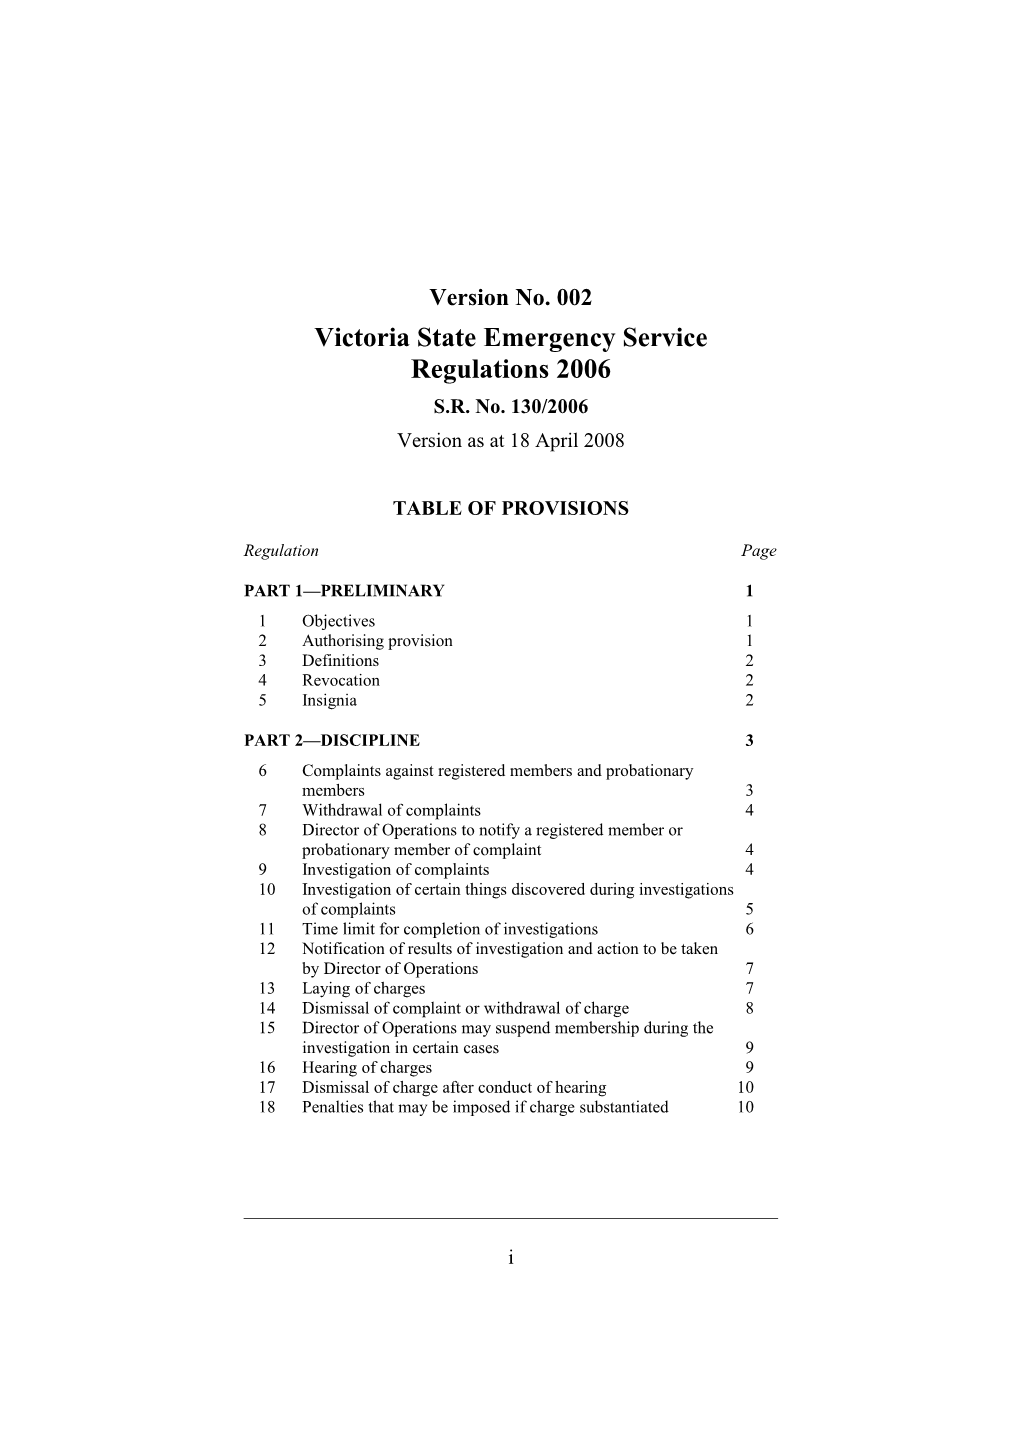 Victoria State Emergency Service Regulations 2006